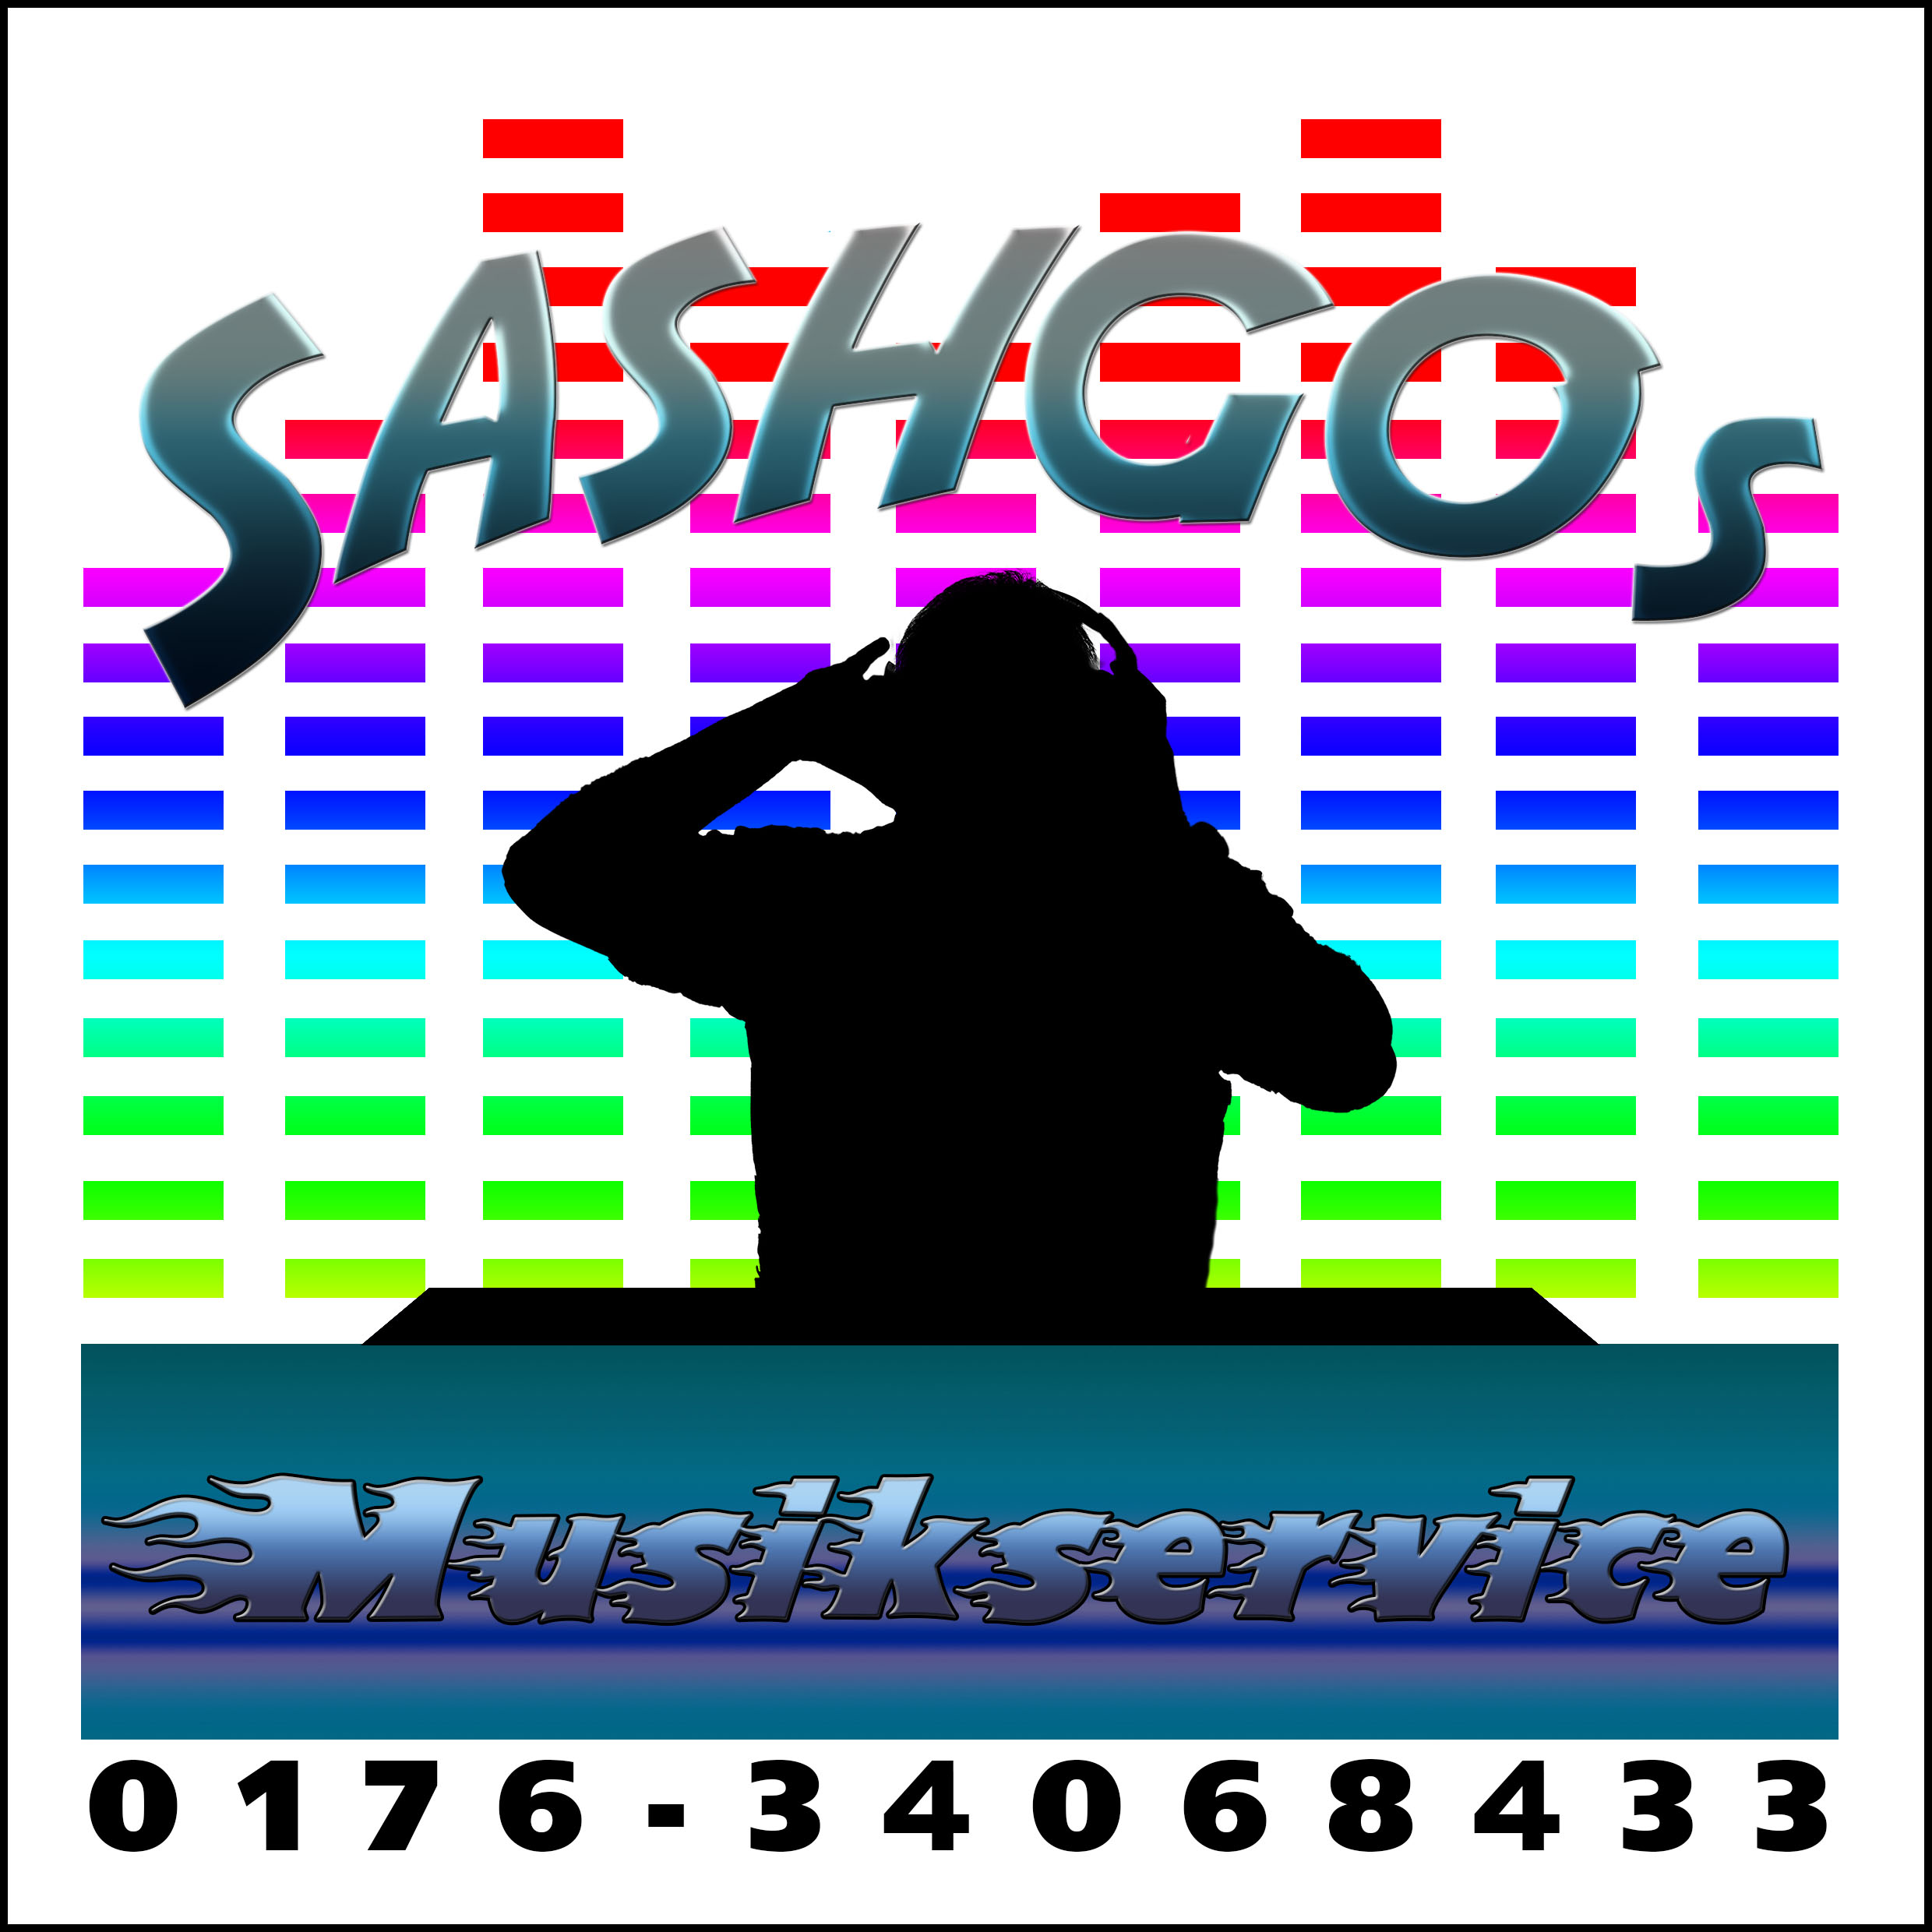 Sashgo’s Musikservice